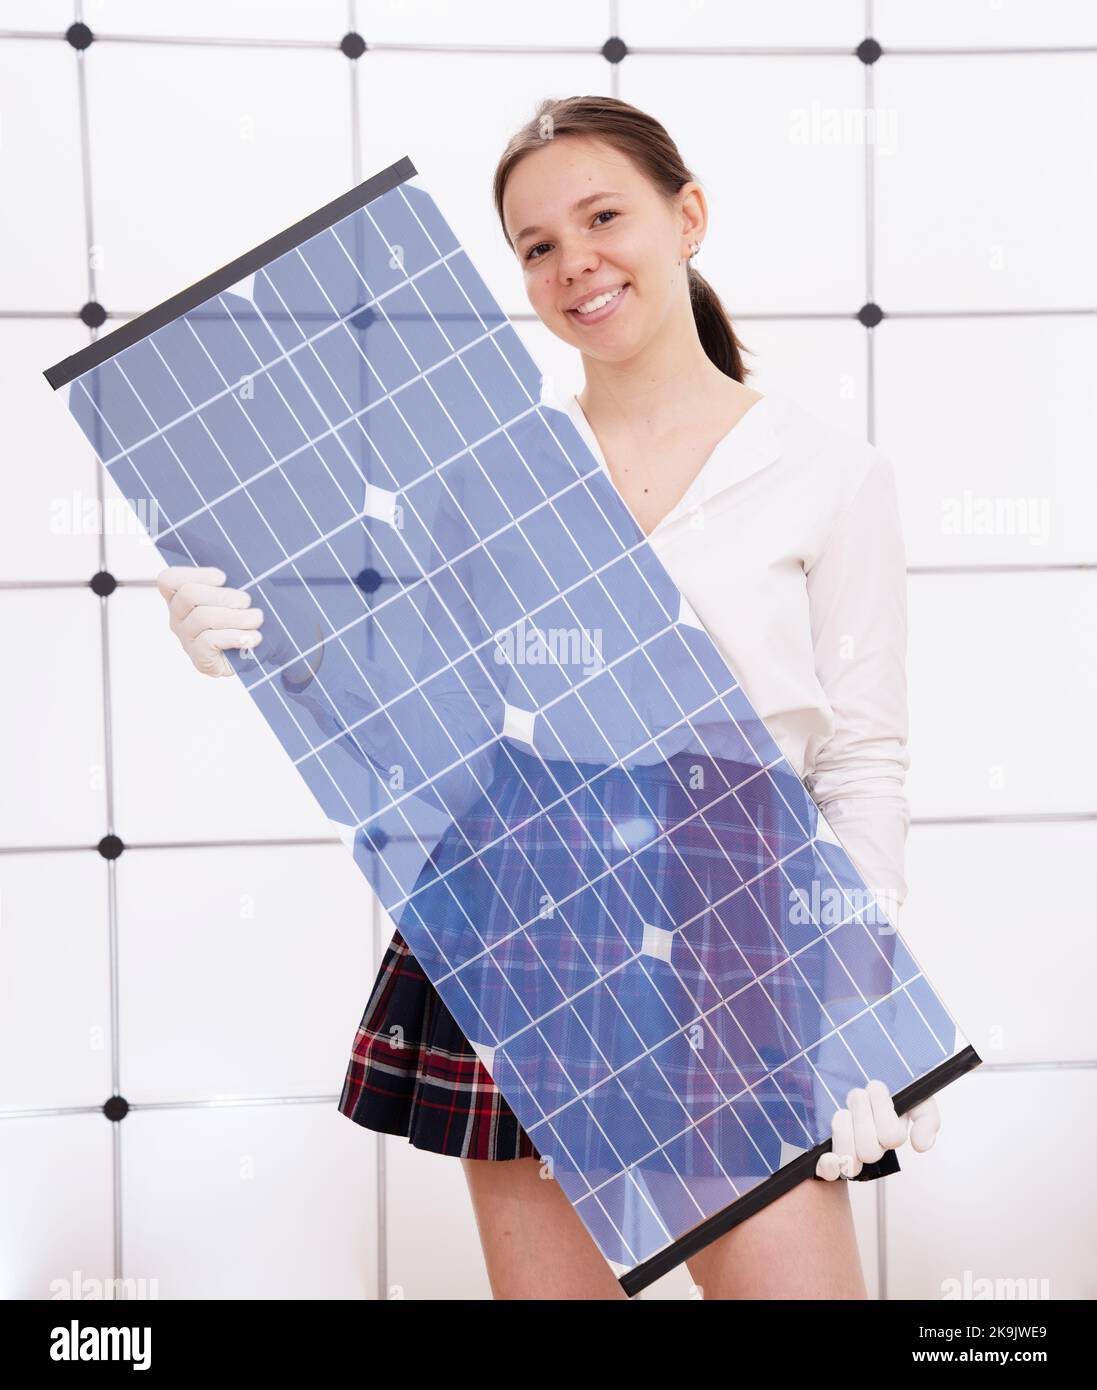 Panel solar transparente fotografías e imágenes de alta resolución - Alamy